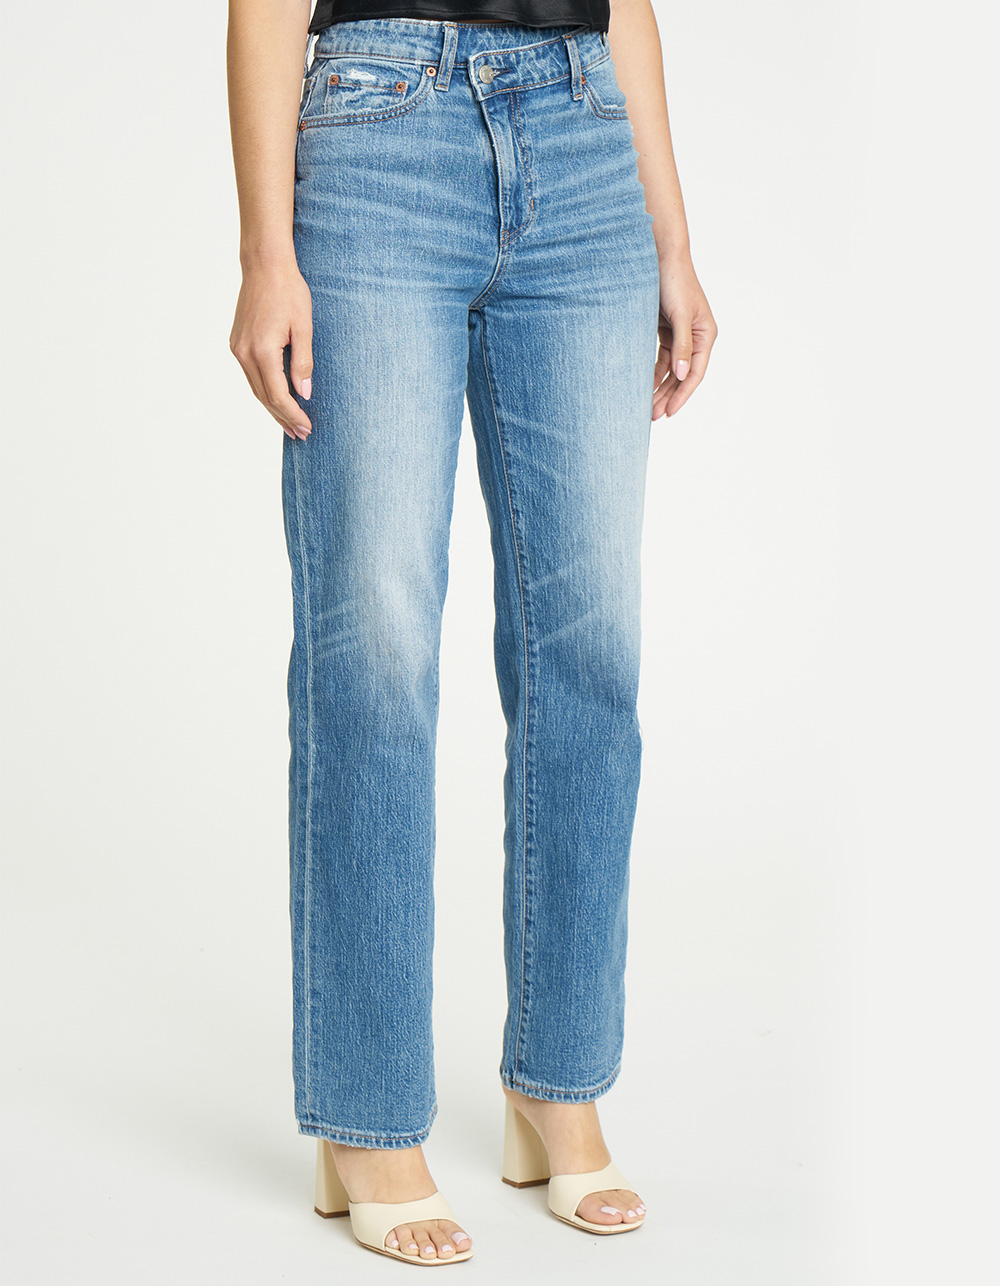 DAZE Sundaze Crossover Womens Jeans - MEDIUM WASH | Tillys